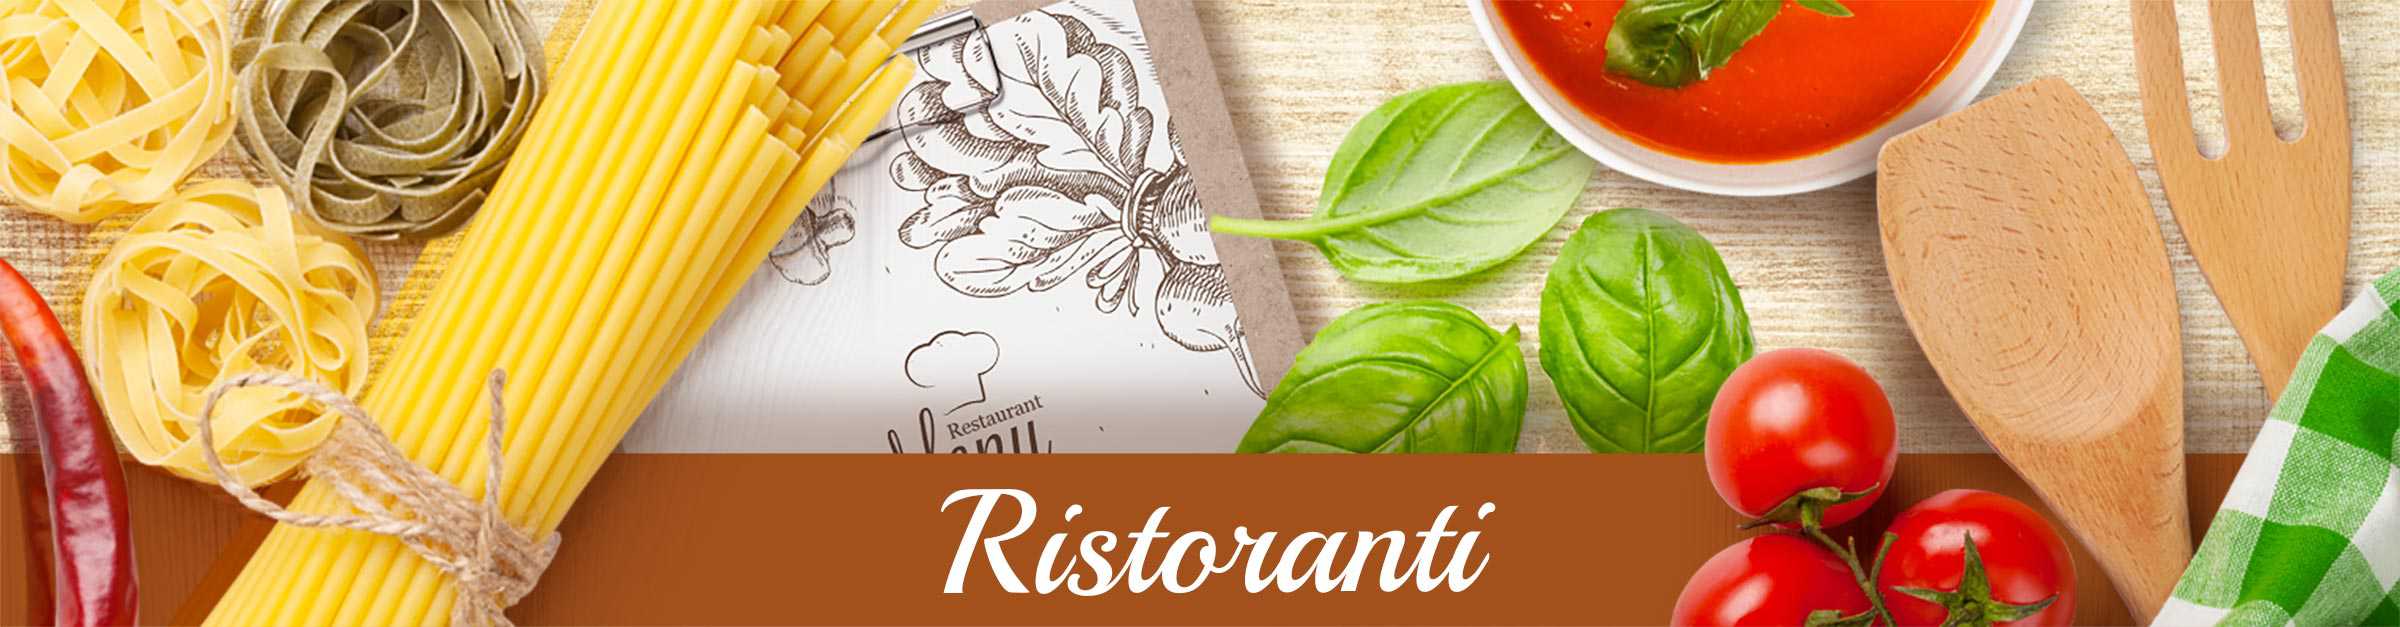 Recensioni Ristoranti - Simon Italian Food